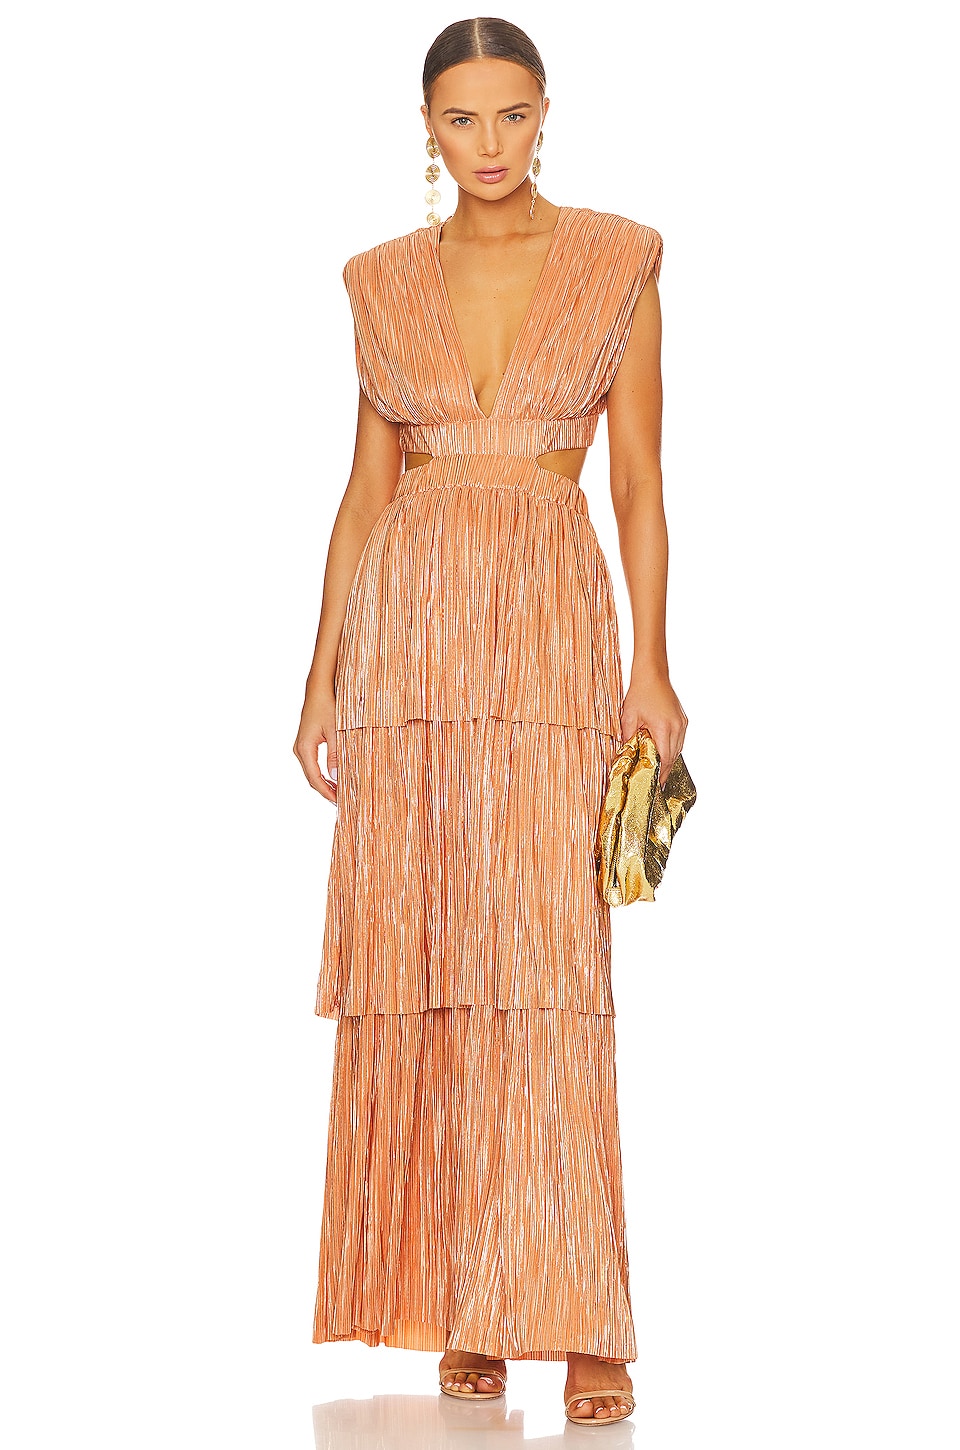 Buy Peach Golden Gown Dress Online.